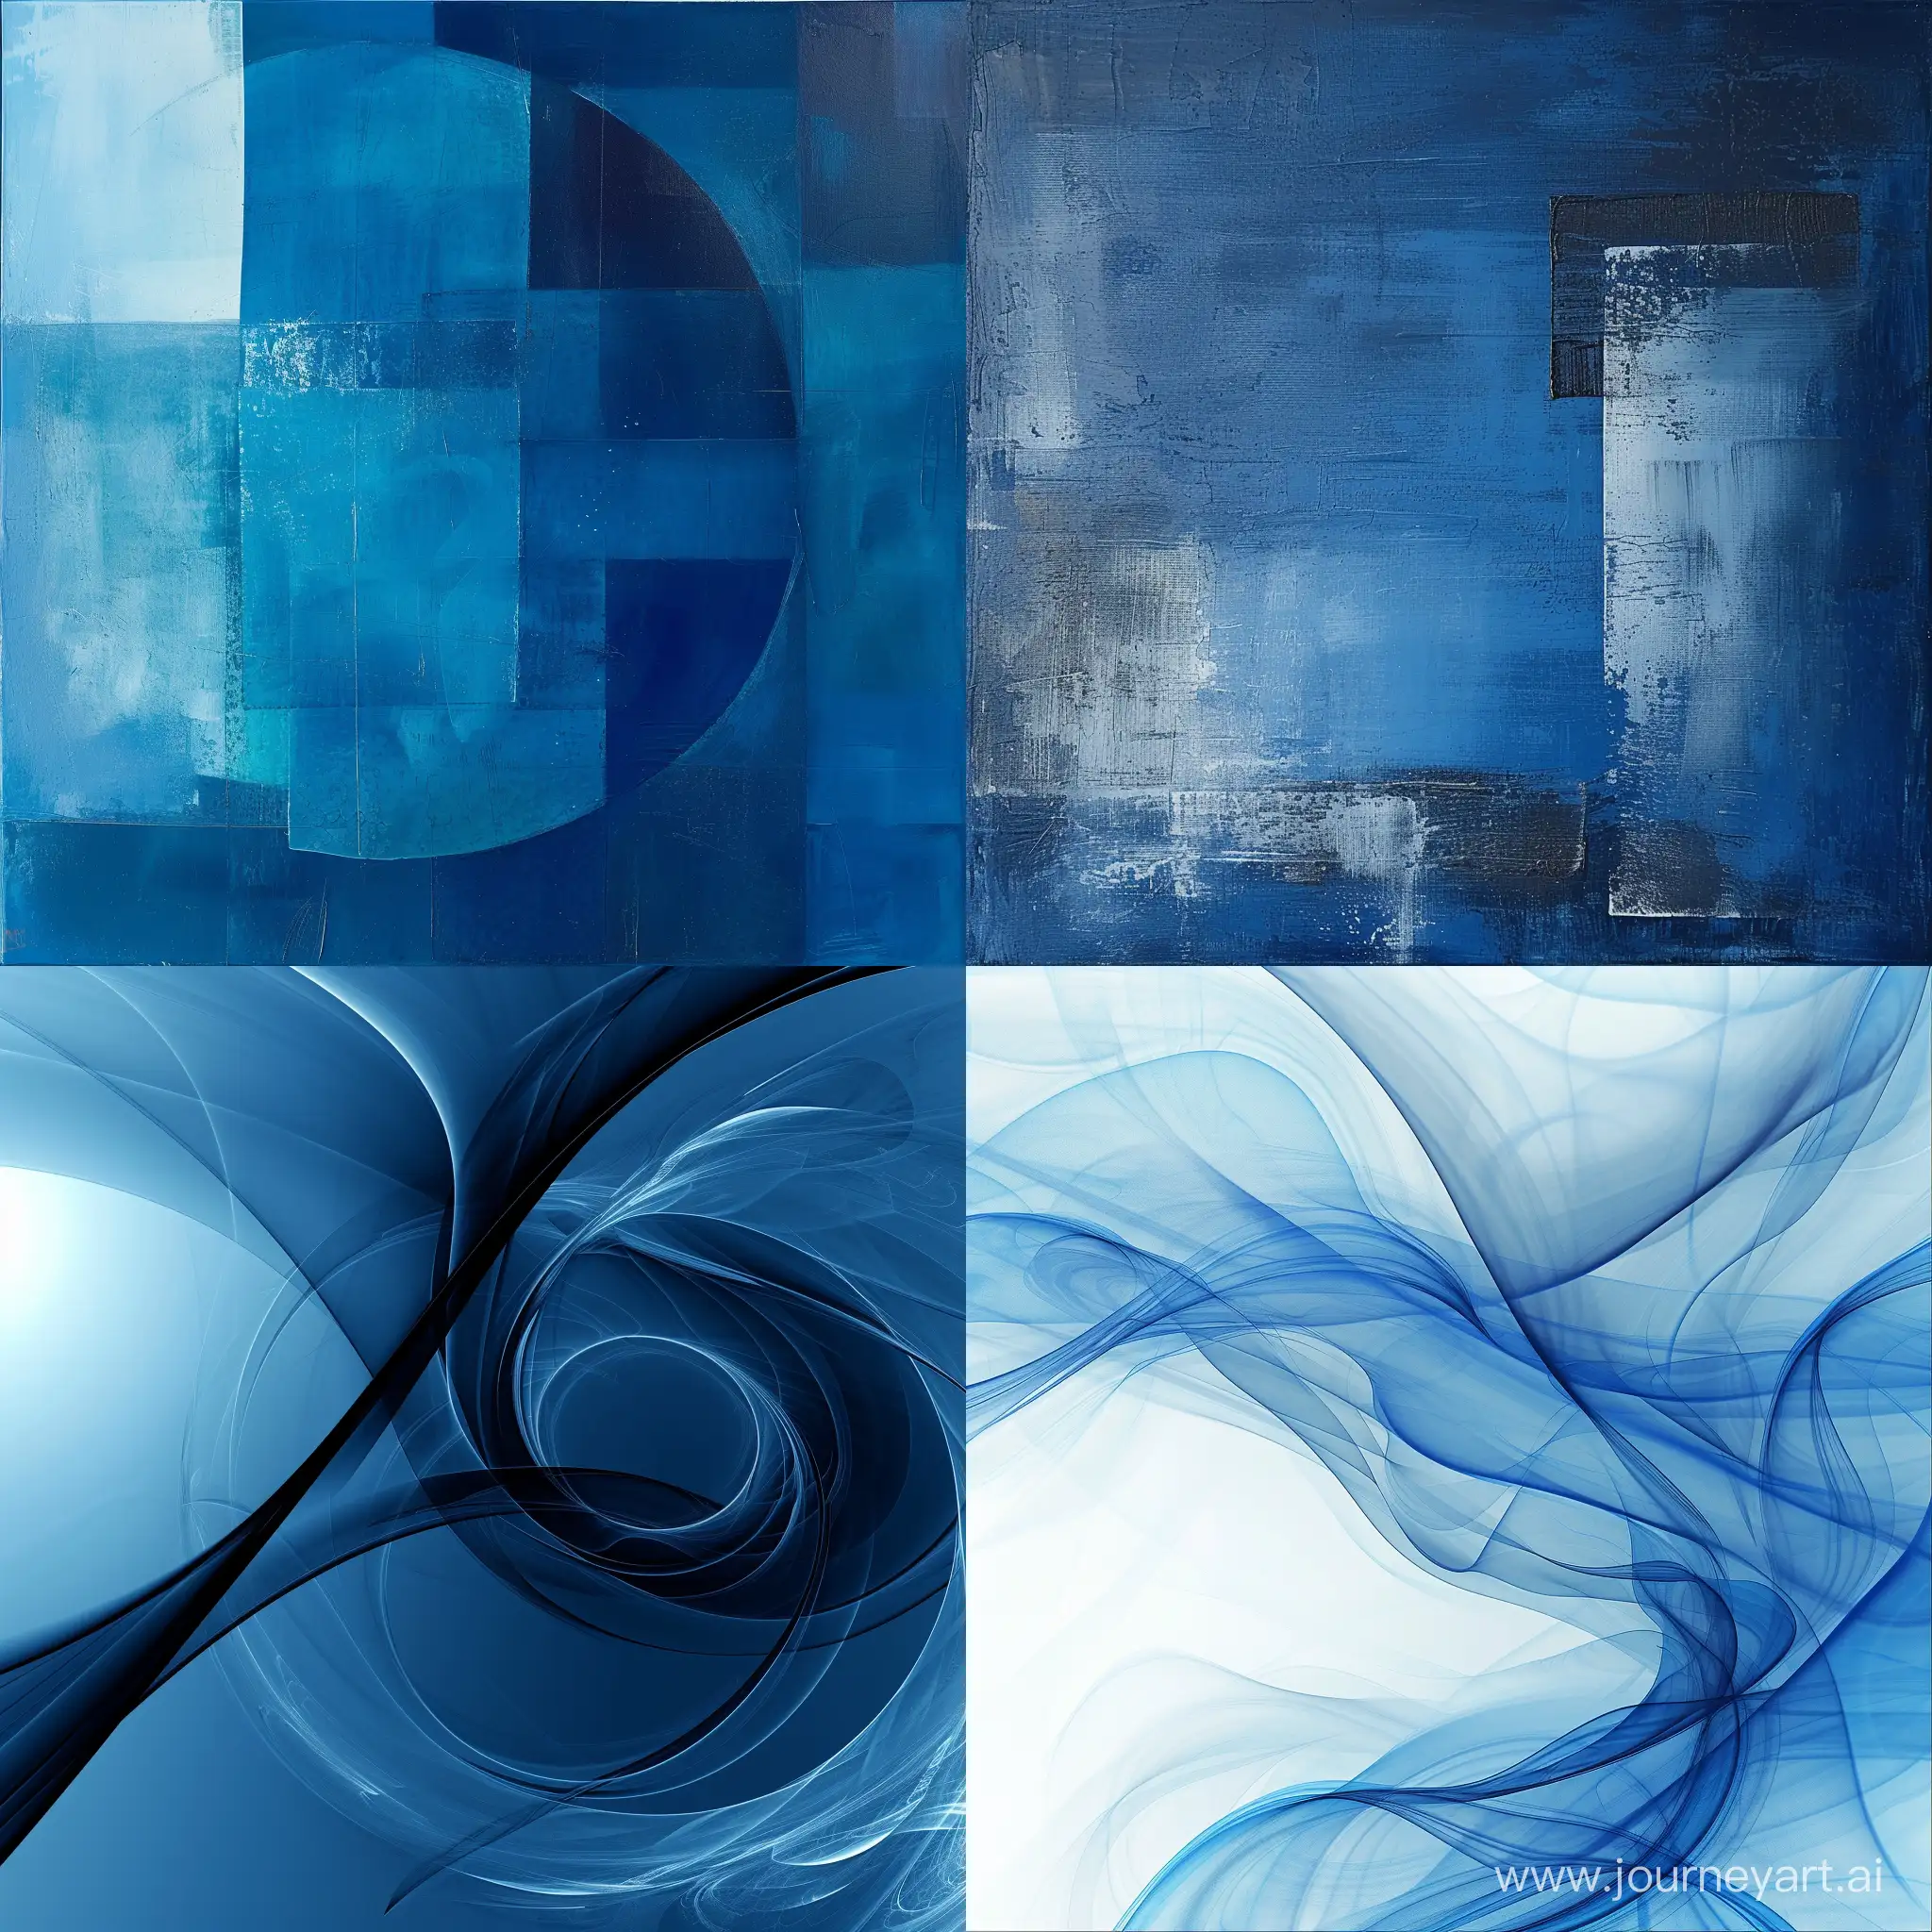 Abstract-Blue-Digital-Art-Vibrant-Geometric-Patterns-in-11-Aspect-Ratio